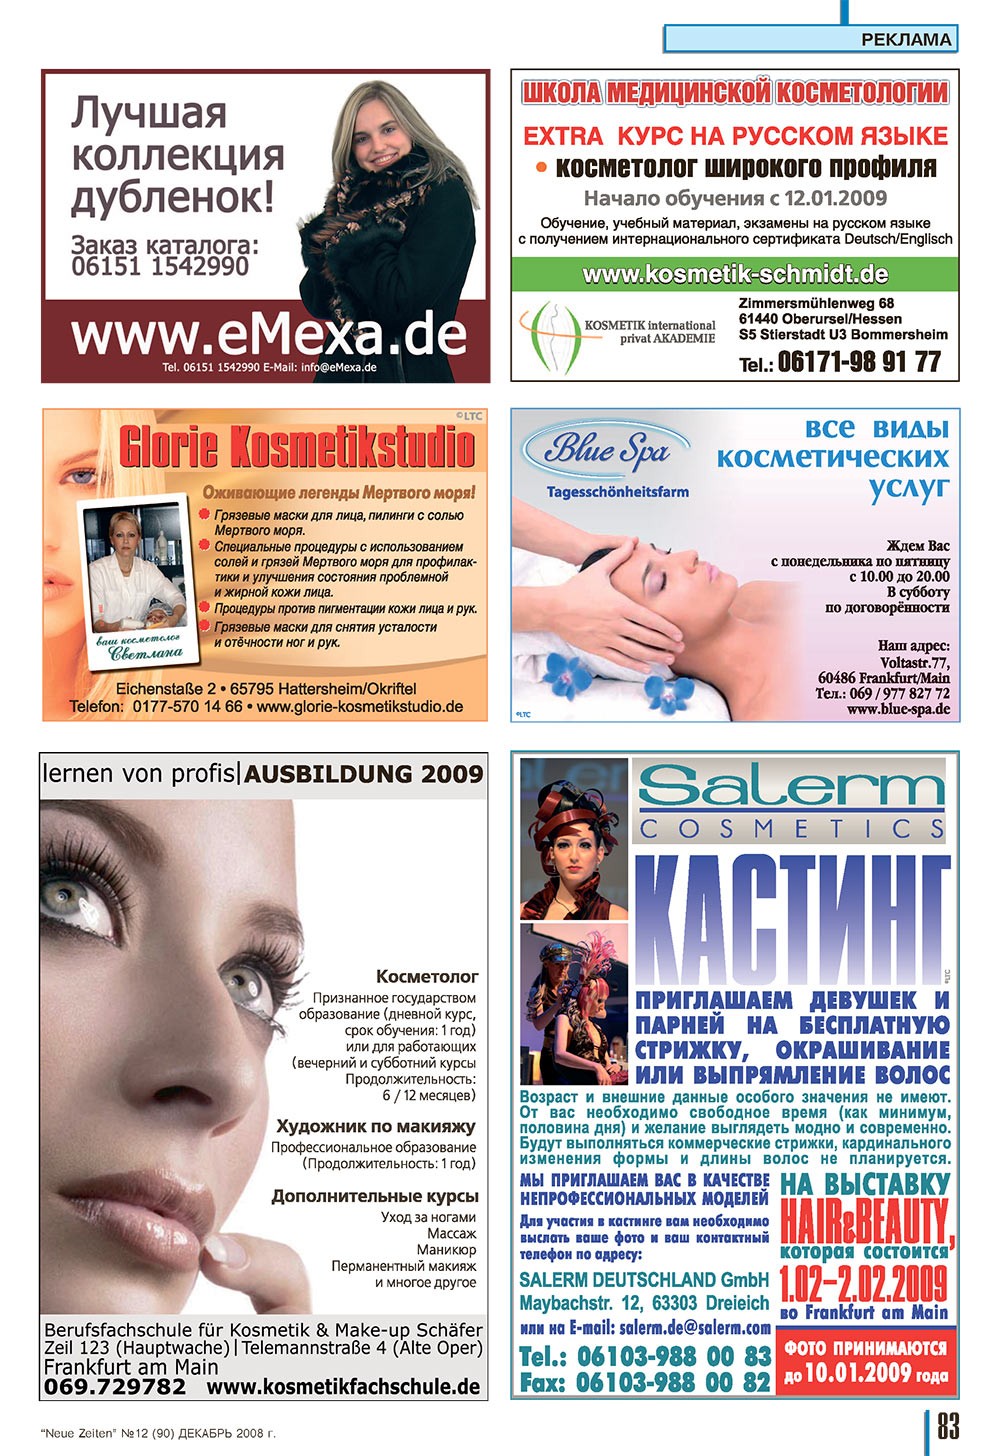 Neue Zeiten (журнал). 2008 год, номер 12, стр. 83